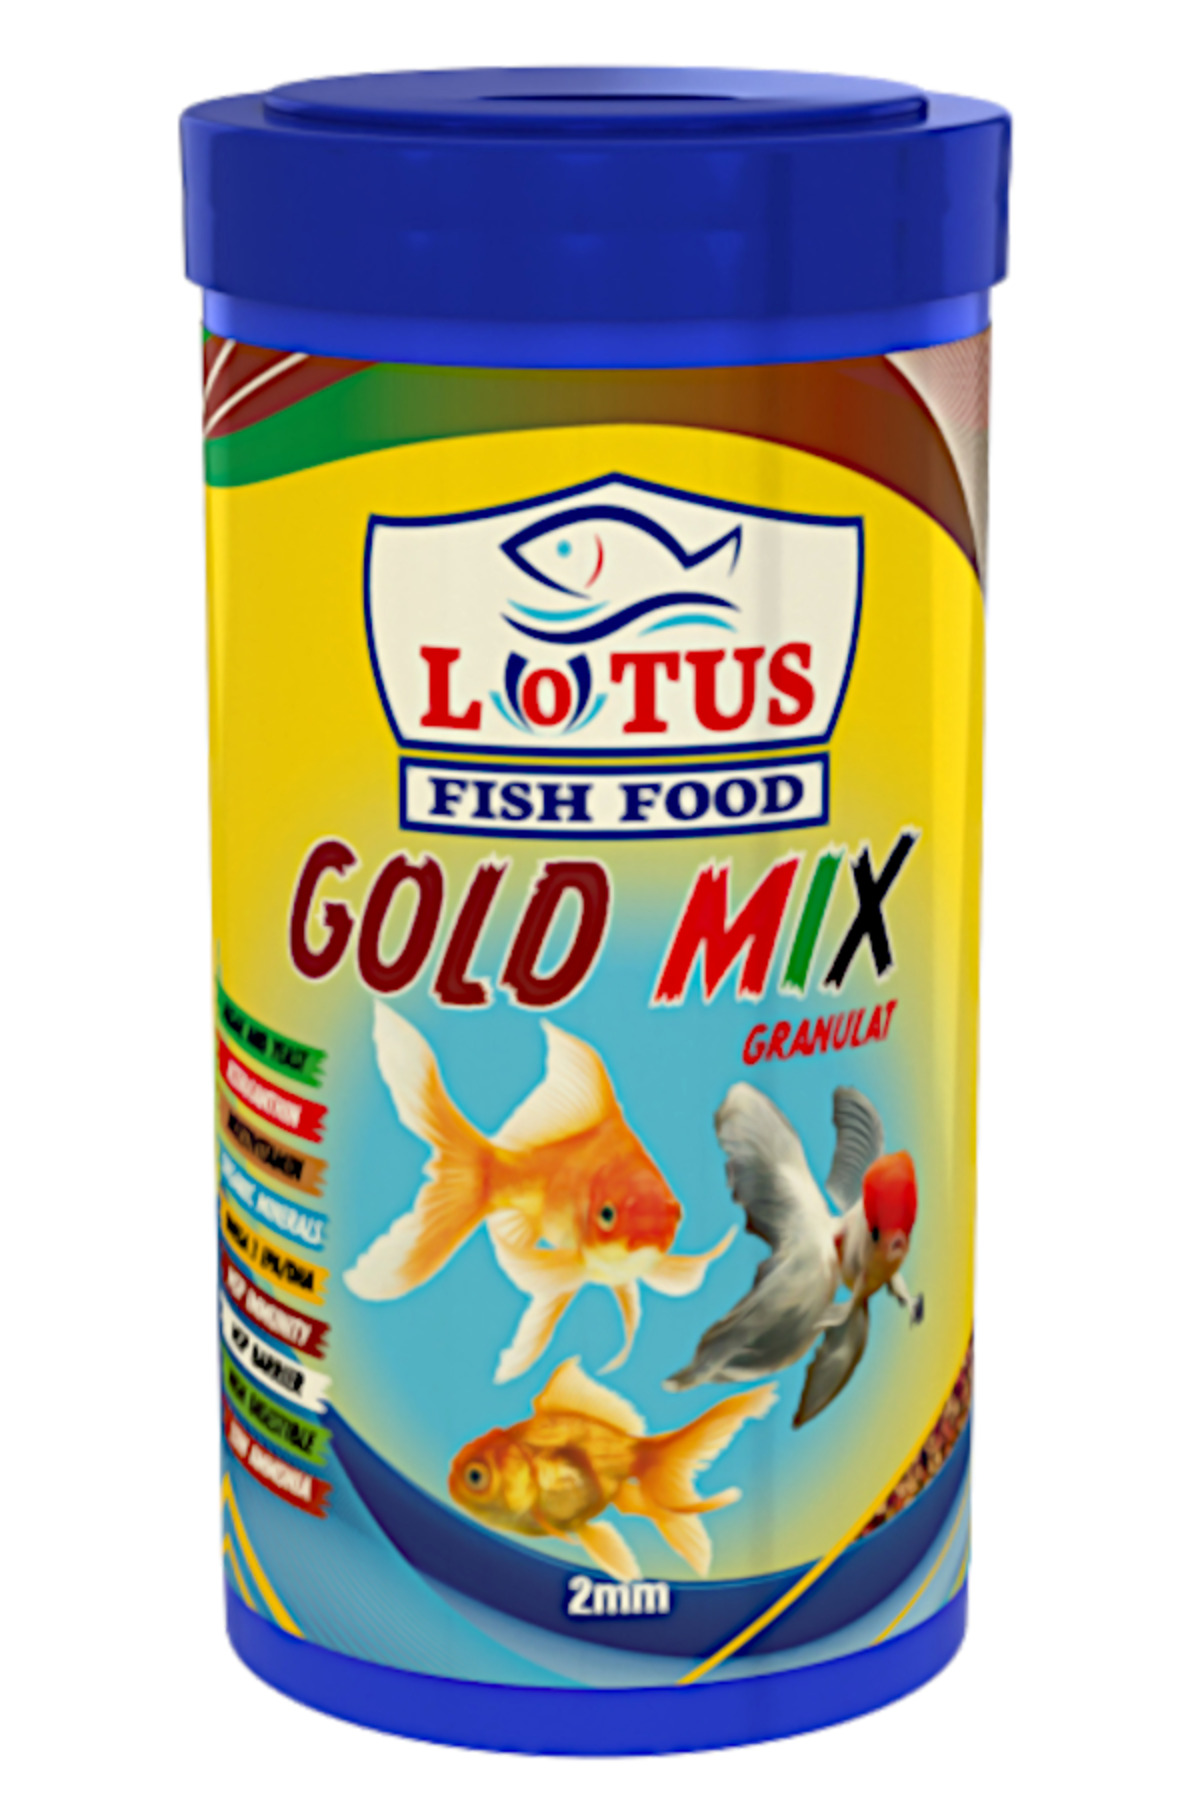 Amore Goldy Mix Granules 125 ml ve 100 ml Lotus Japon Baligi Yemi ve Clear Akvaryum Berraklastirici